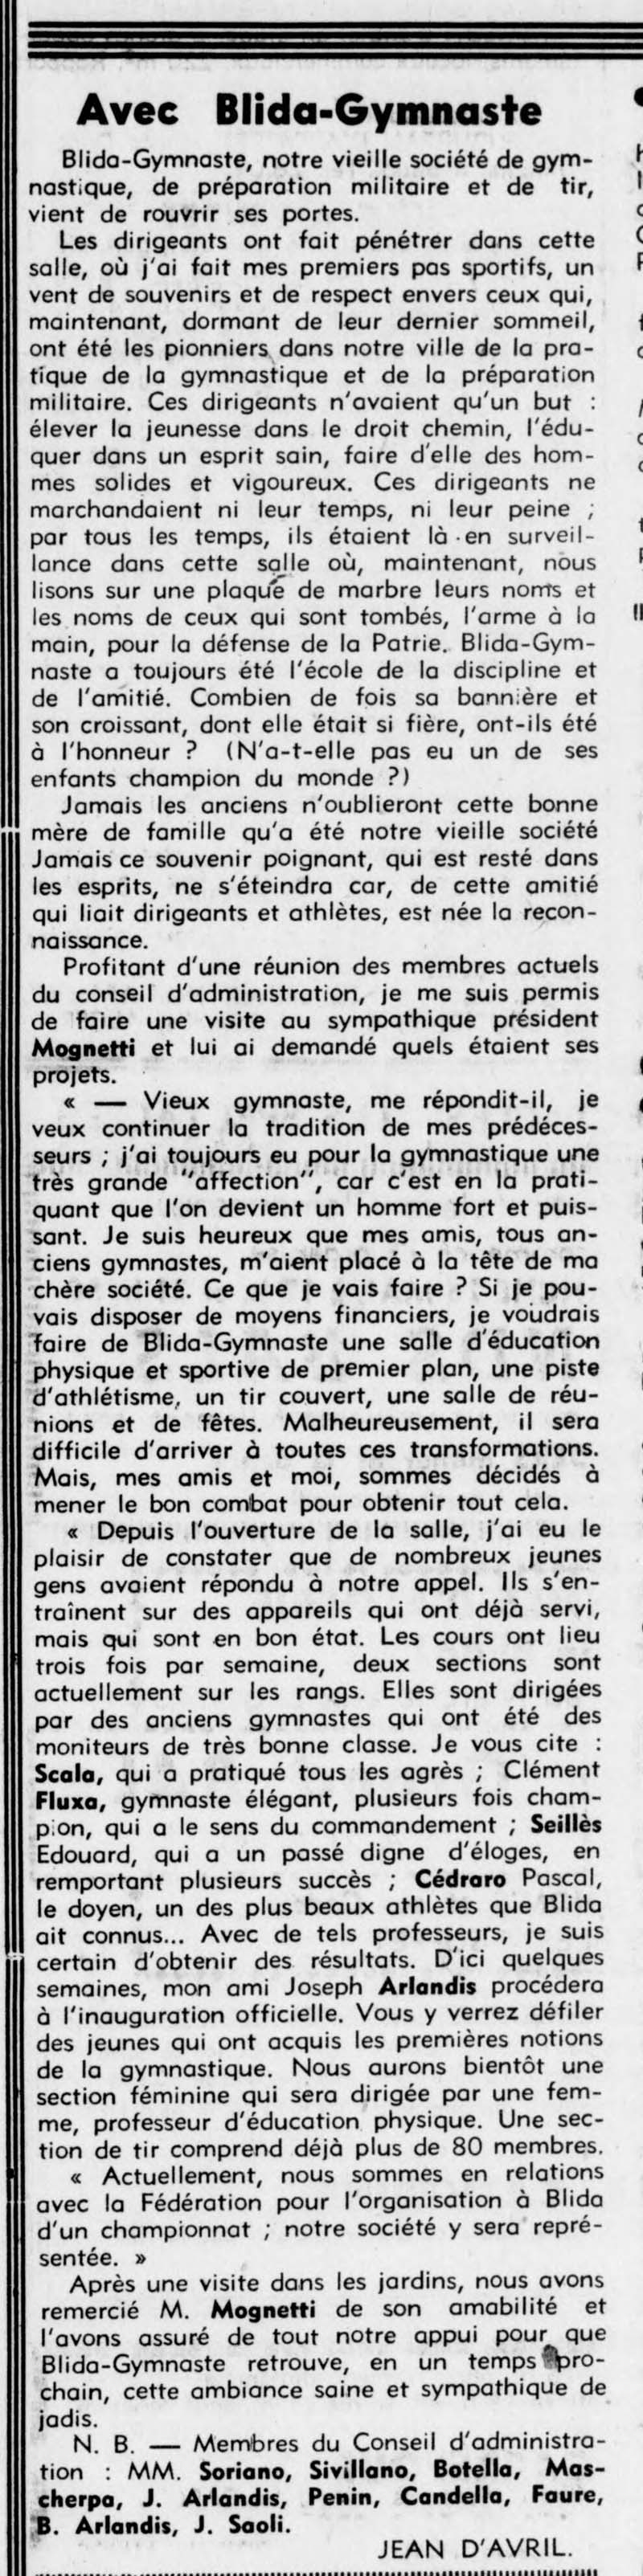 Le_Tell_1946-05-25-blida gymnaste.jpg